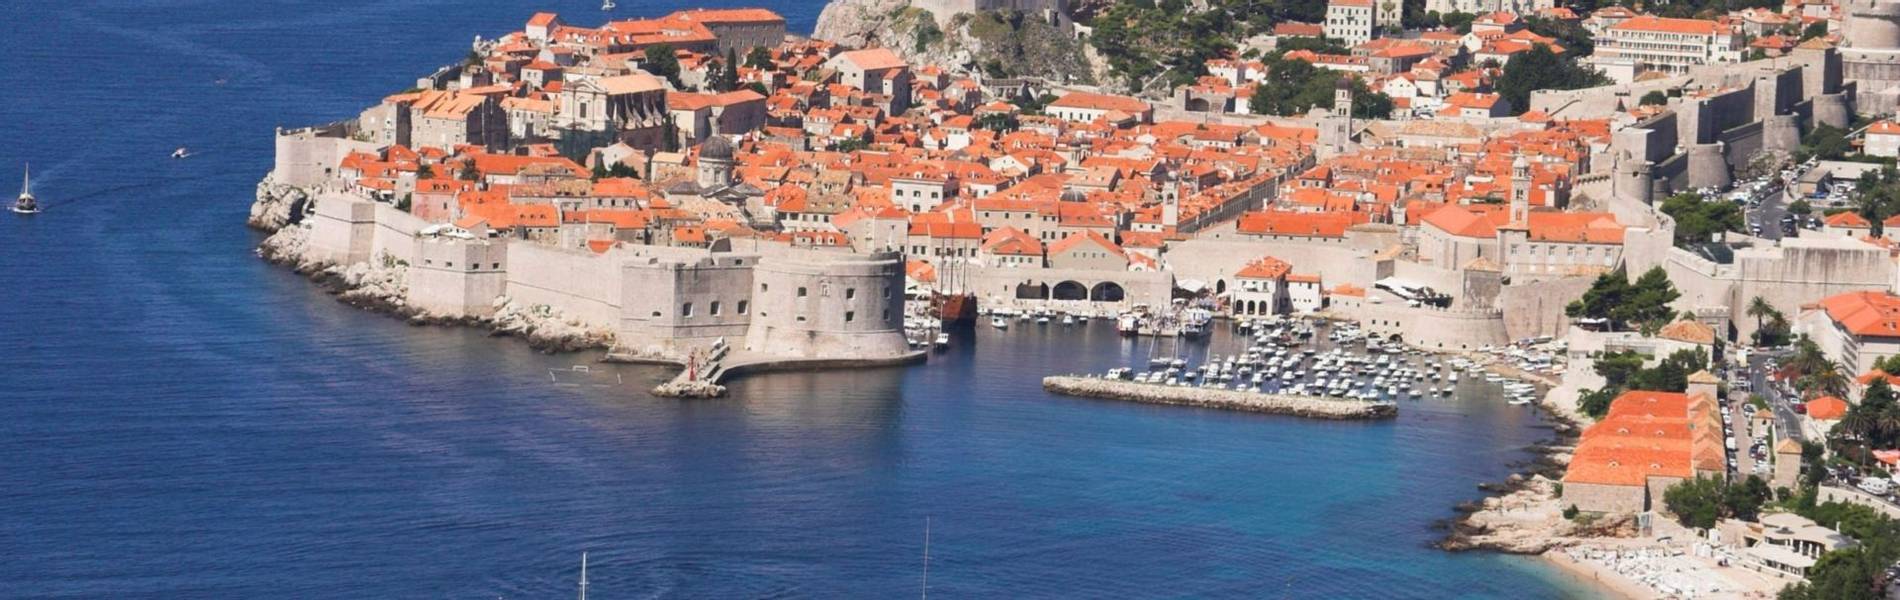 Adriatic Odyssey Dubrovnik, Croatia.jpg